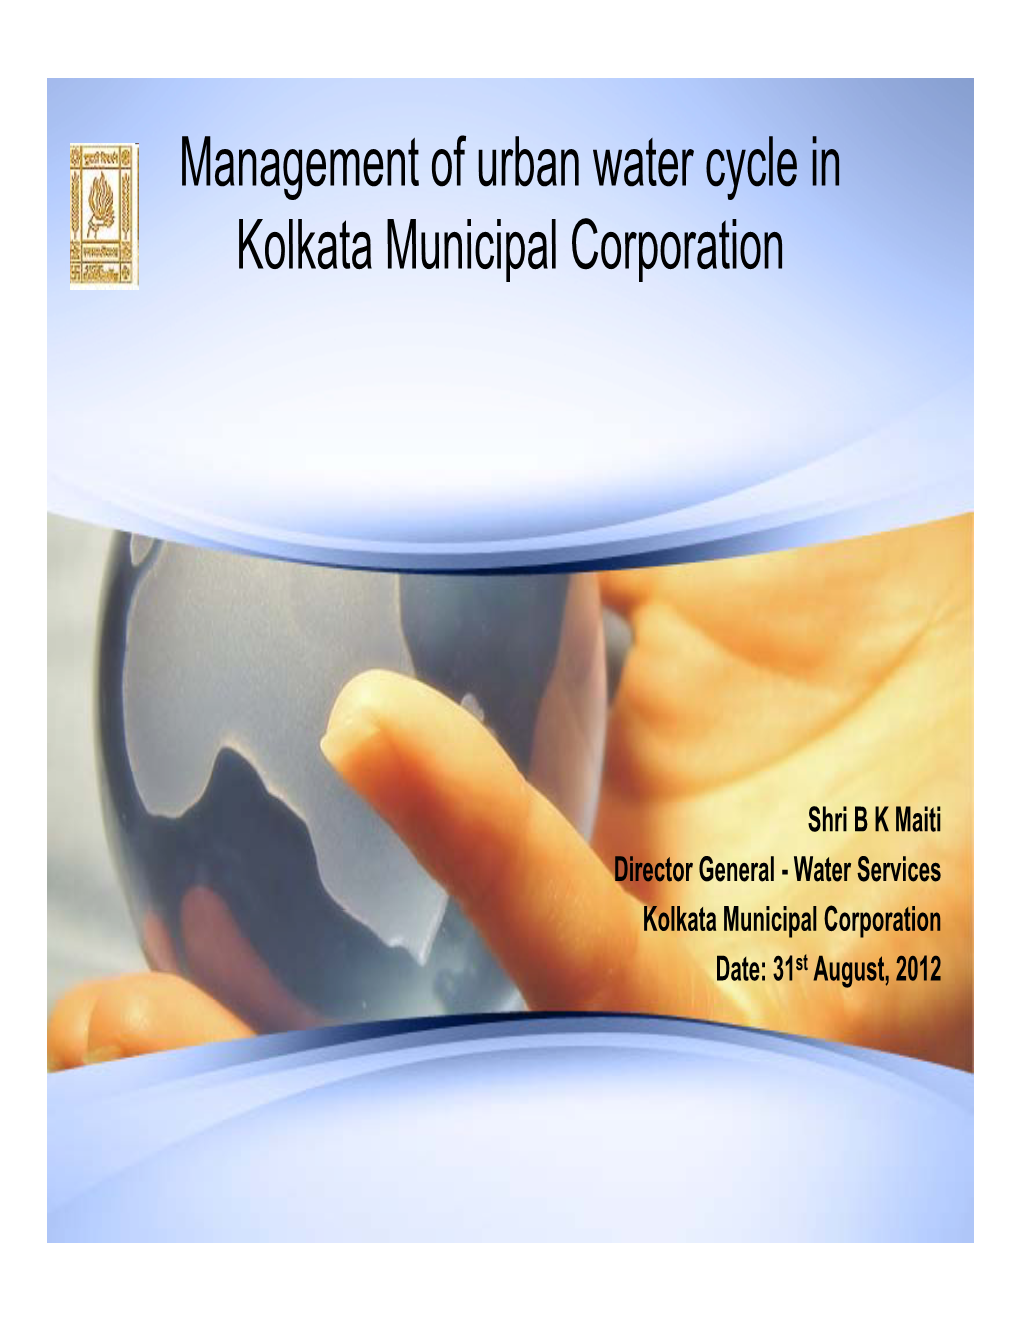 Management of Urban Water Cycle in Kolkata Municipal Corporation